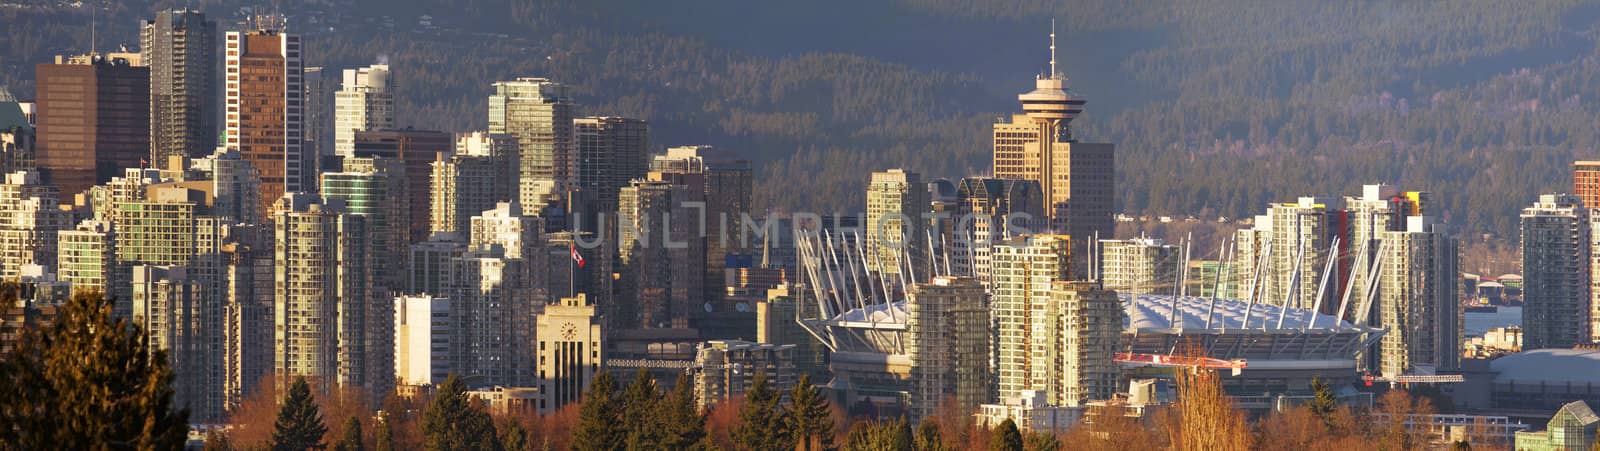 Sunset on Vancouver BC City Skyline by jpldesigns